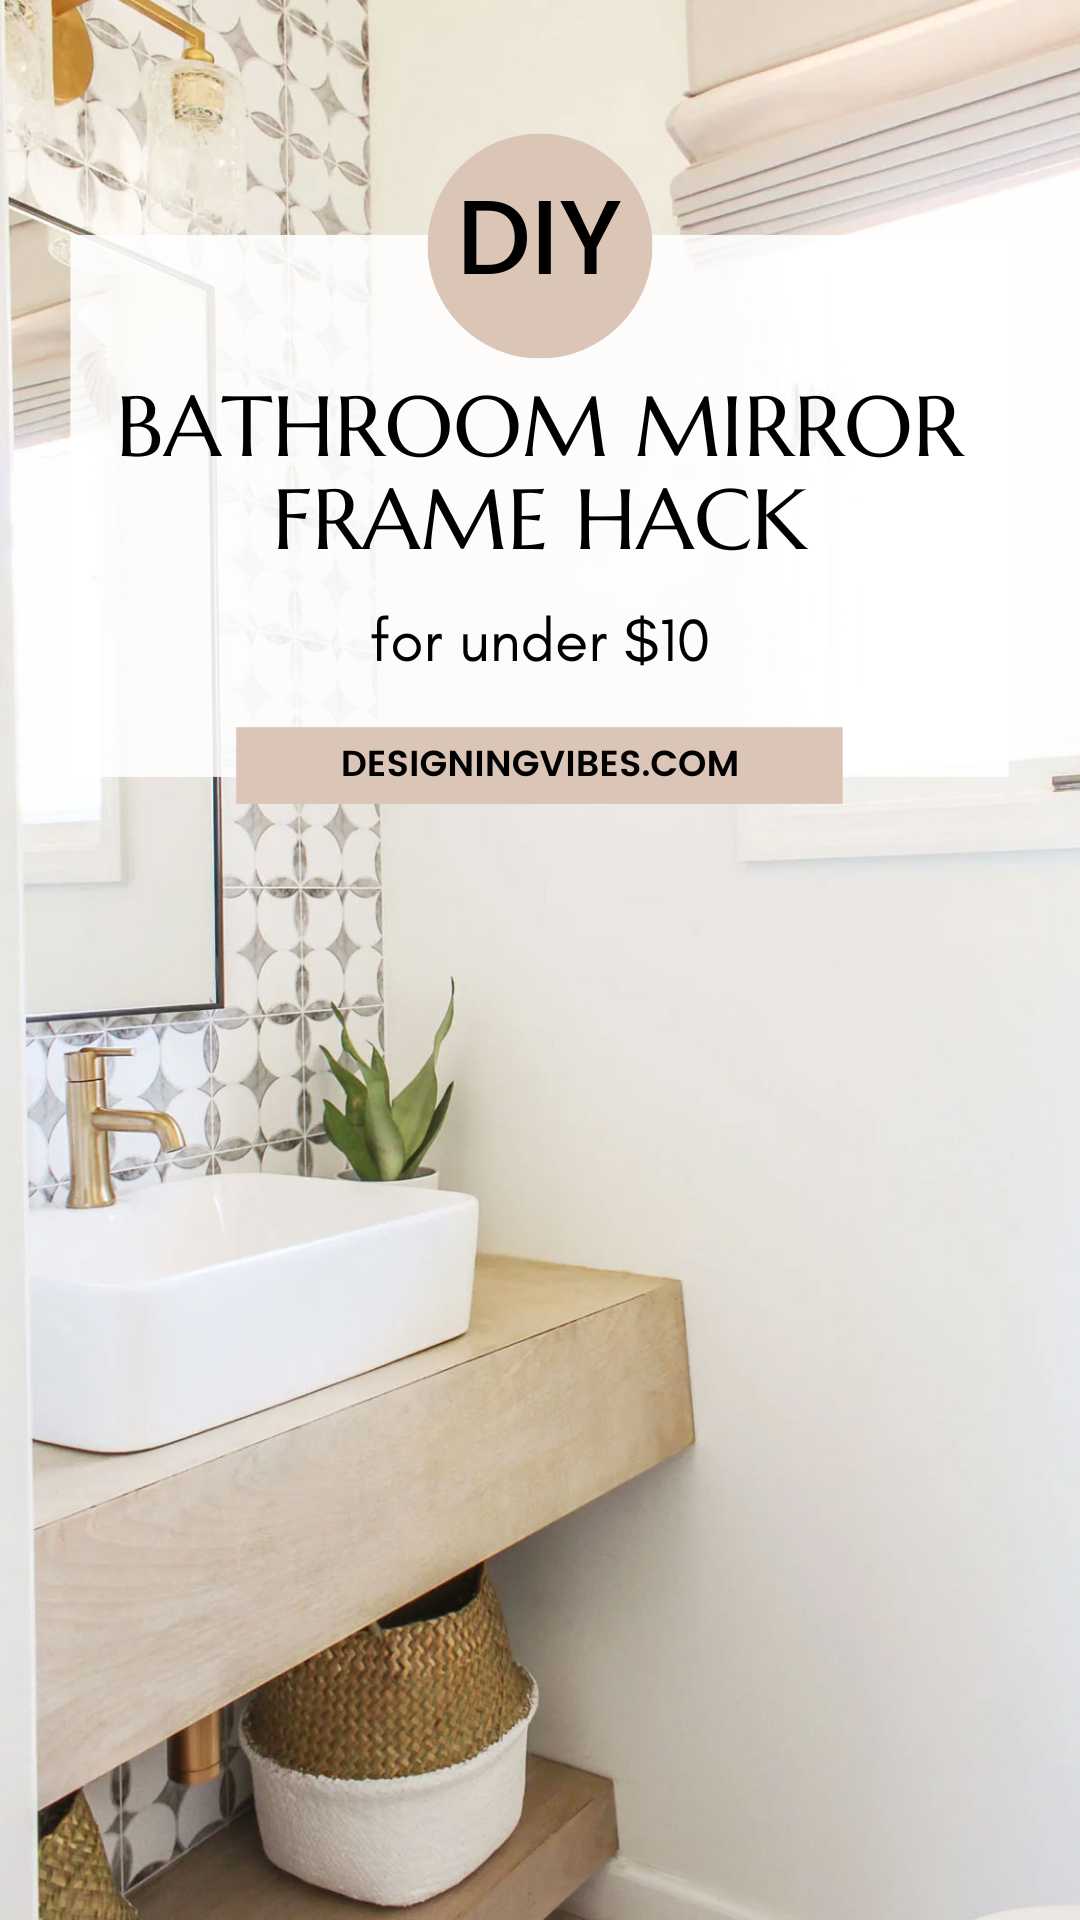 How To Build a DIY Bathroom Mirror Frame The Easy Way